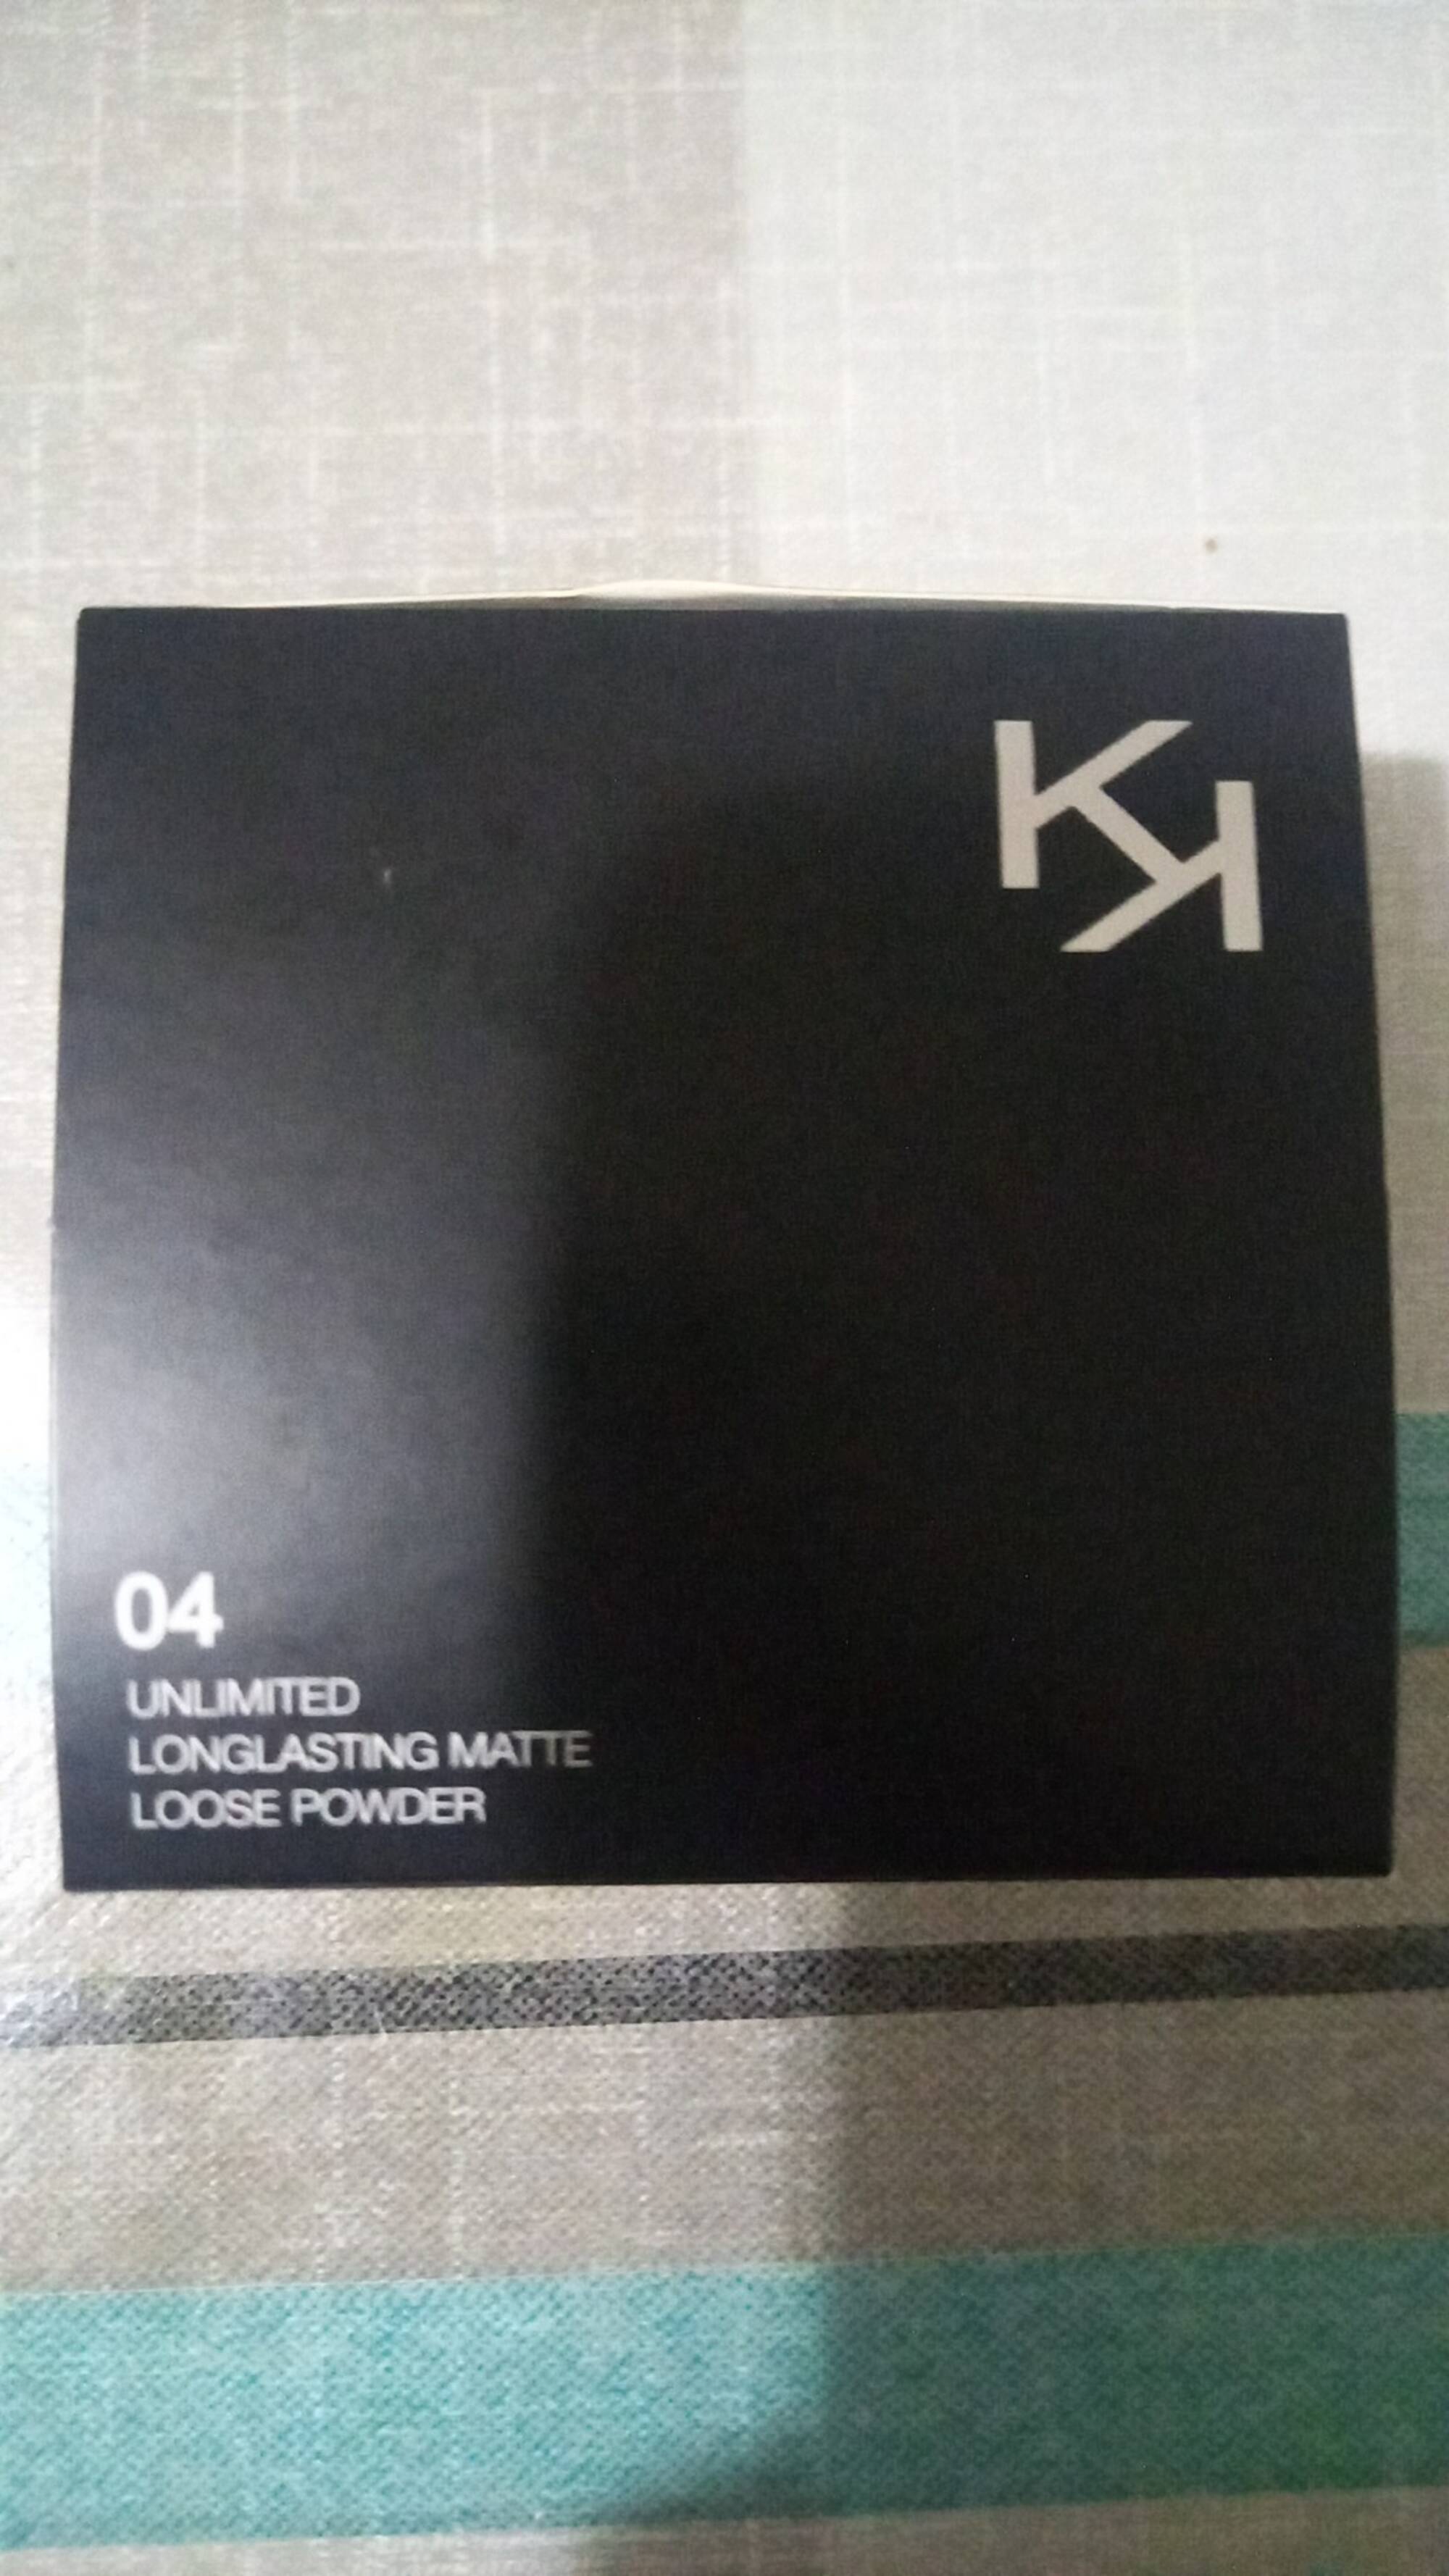 KIKO - 04 unlimited longlasting matte loose powder